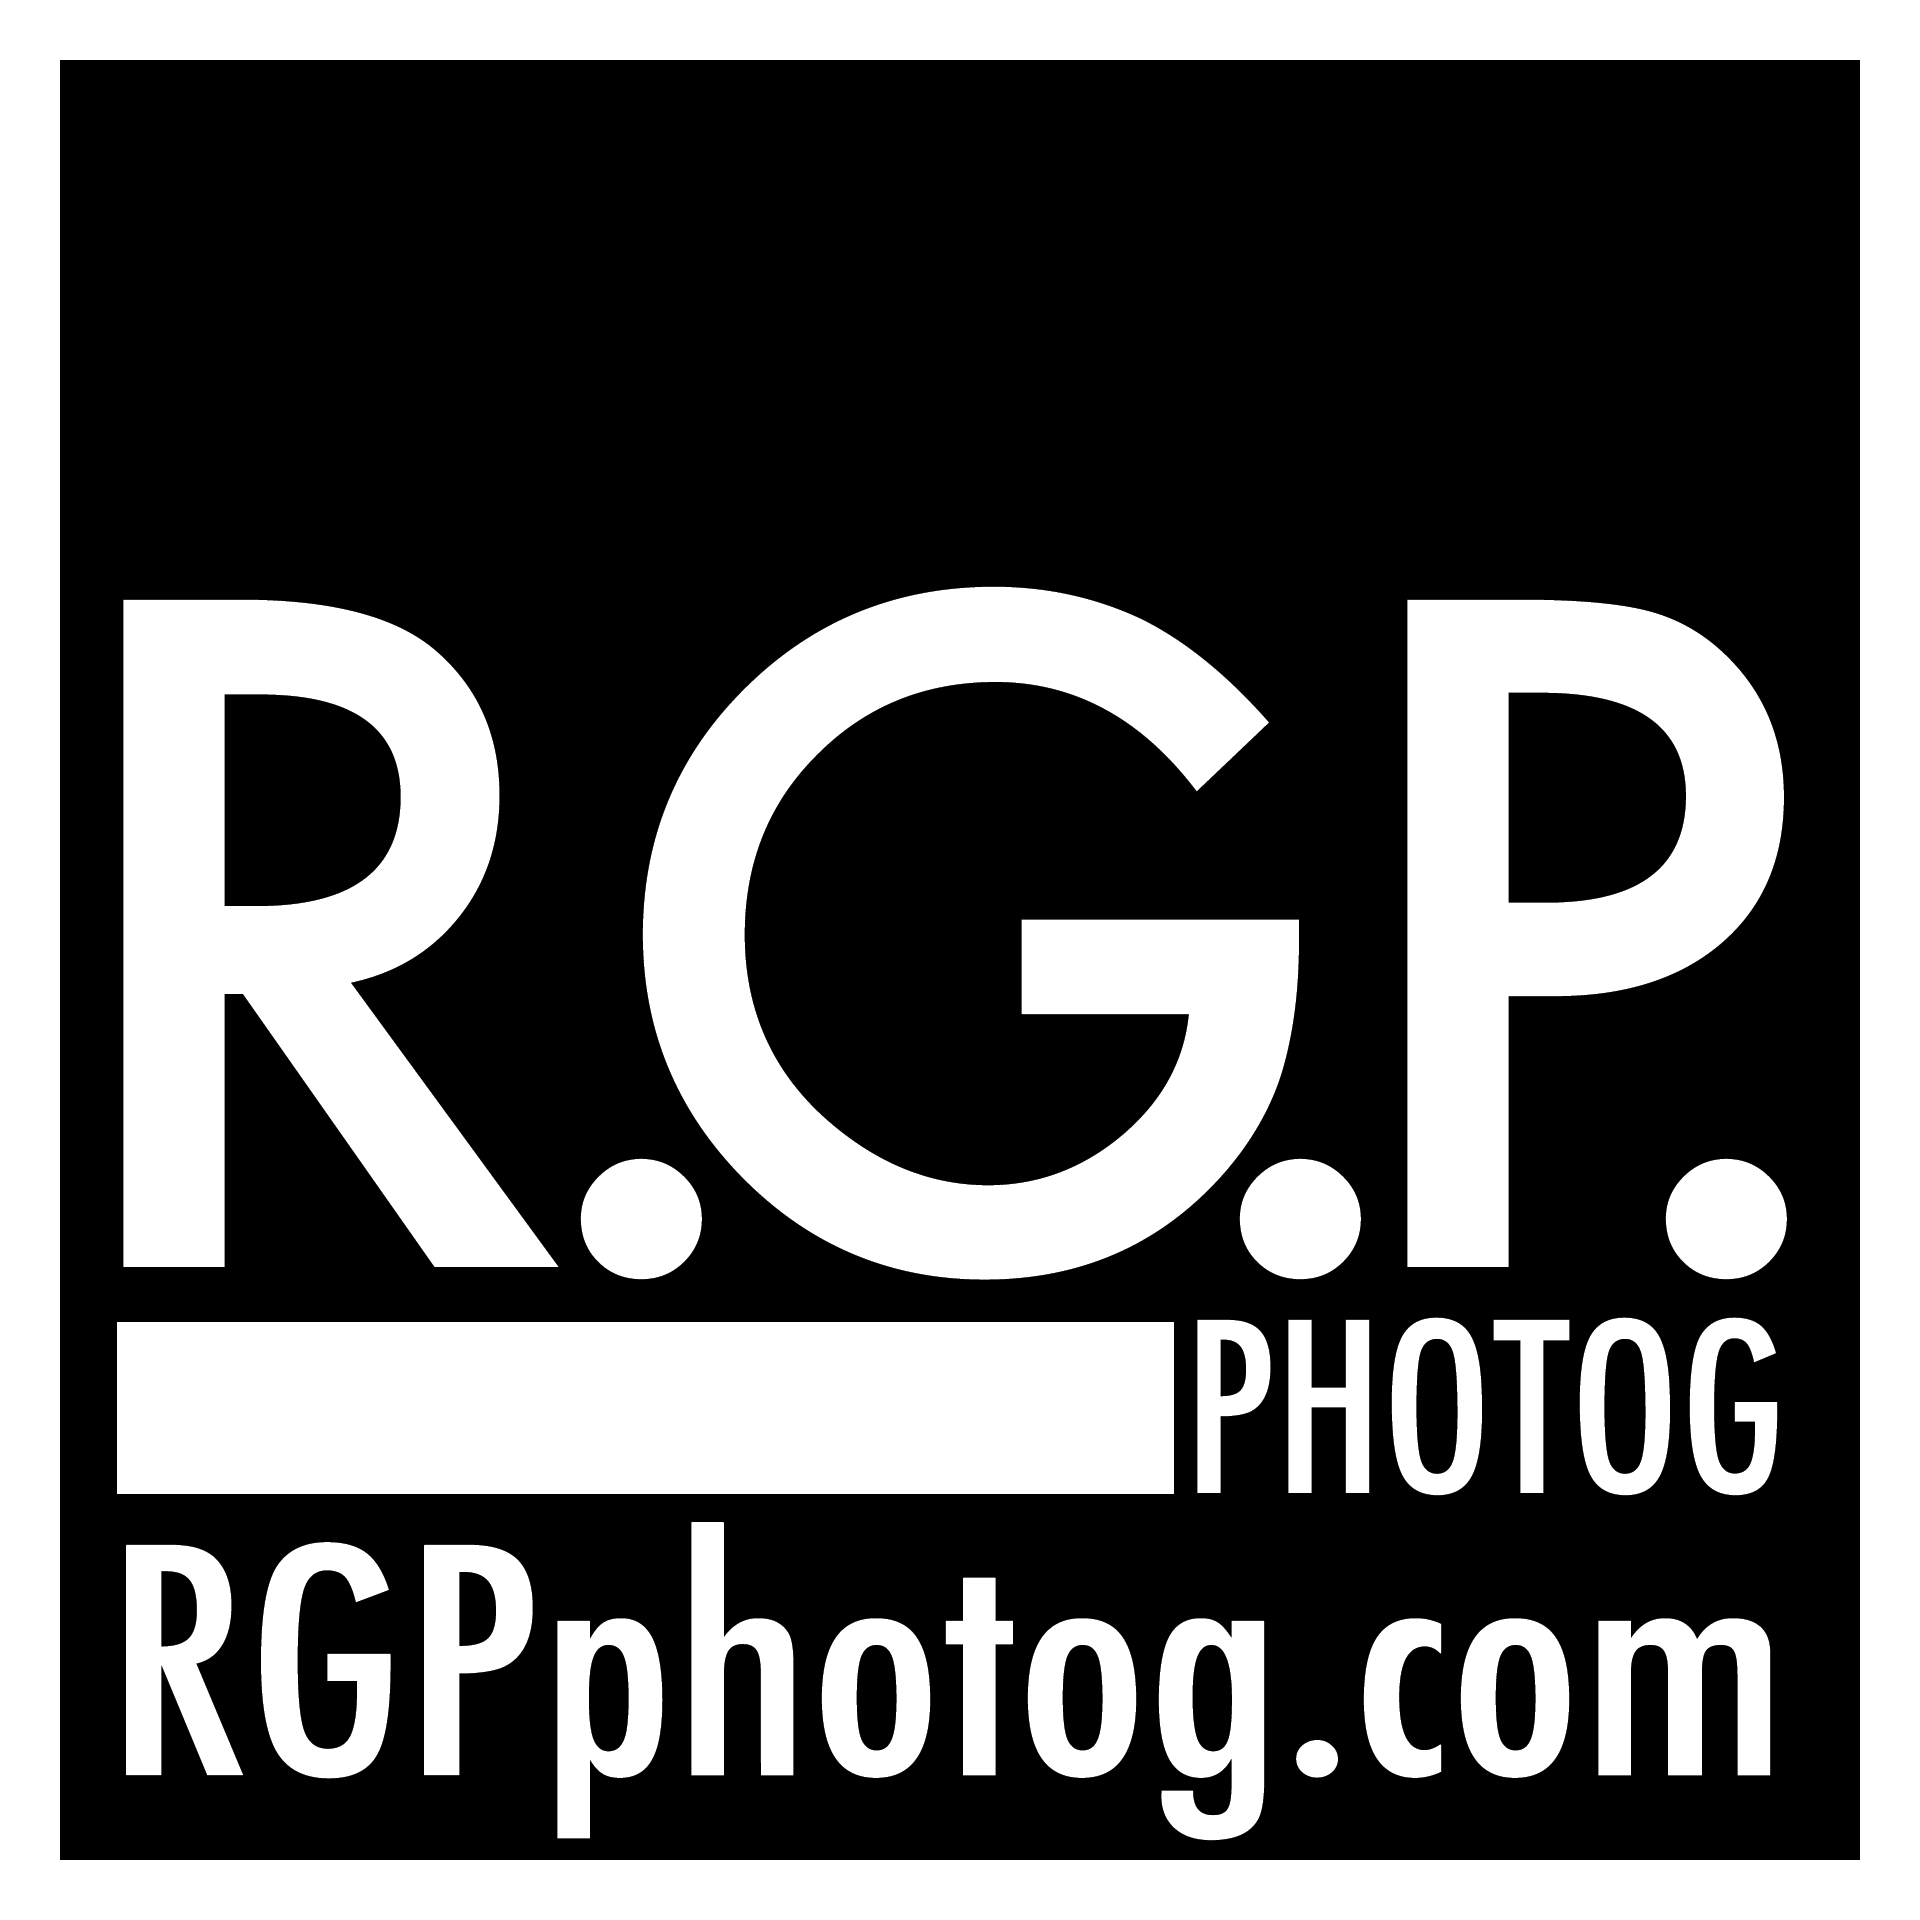 RGPphotog.com